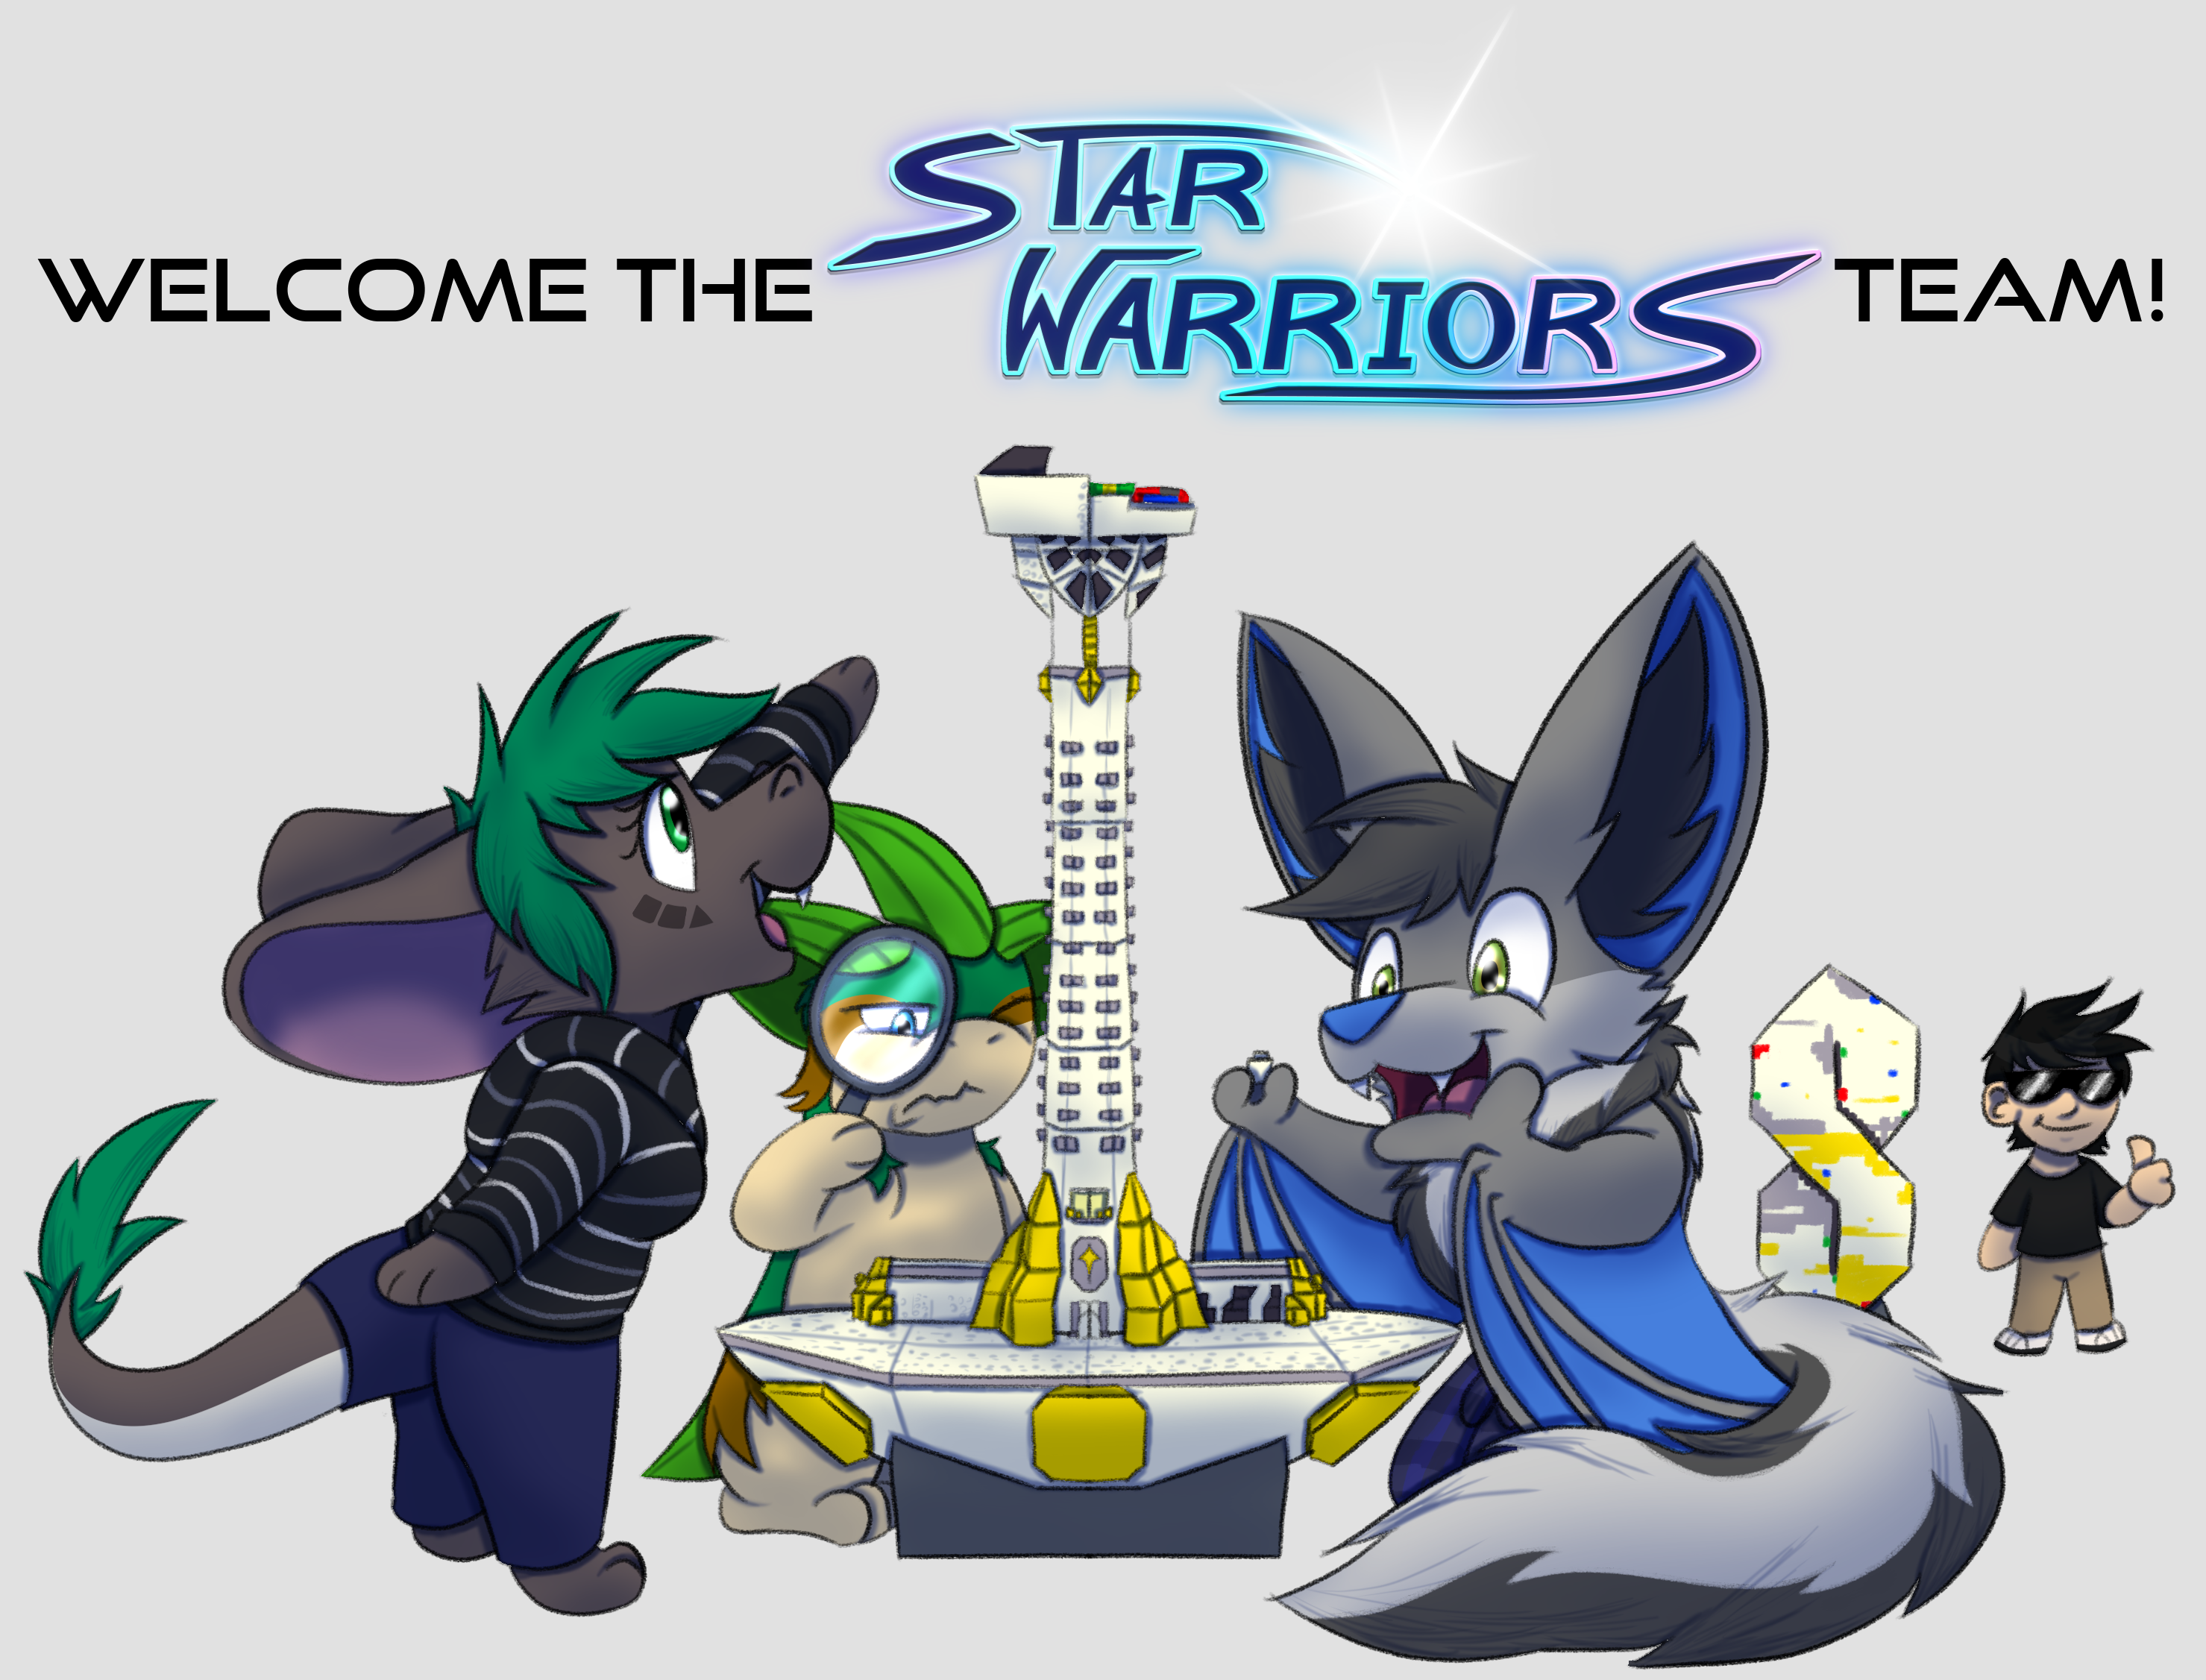 The Star Warriors team grows